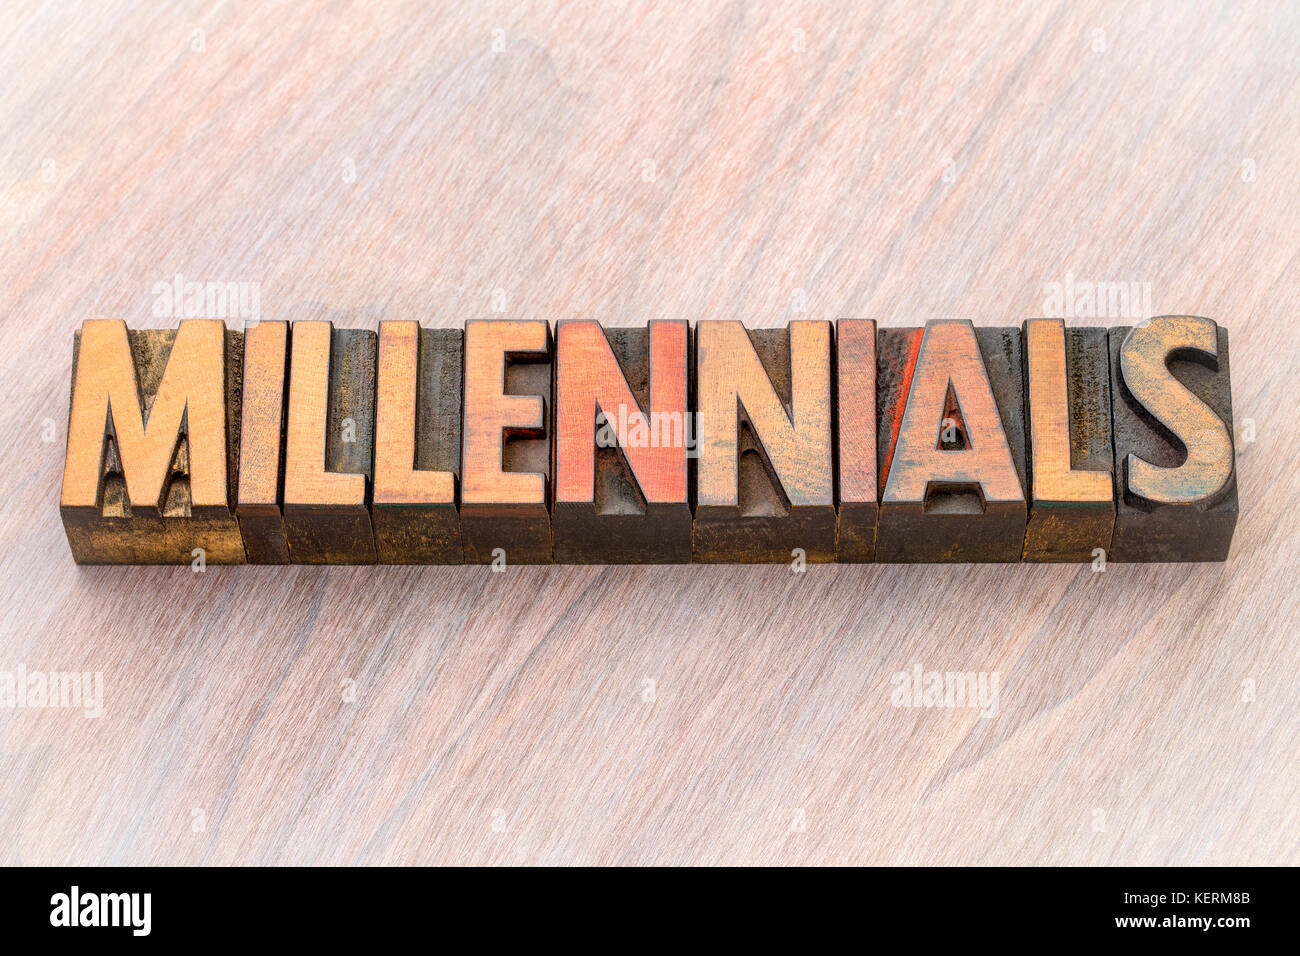 millennials (millennial generation) word abstract in vintage letterpress wood type Stock Photo